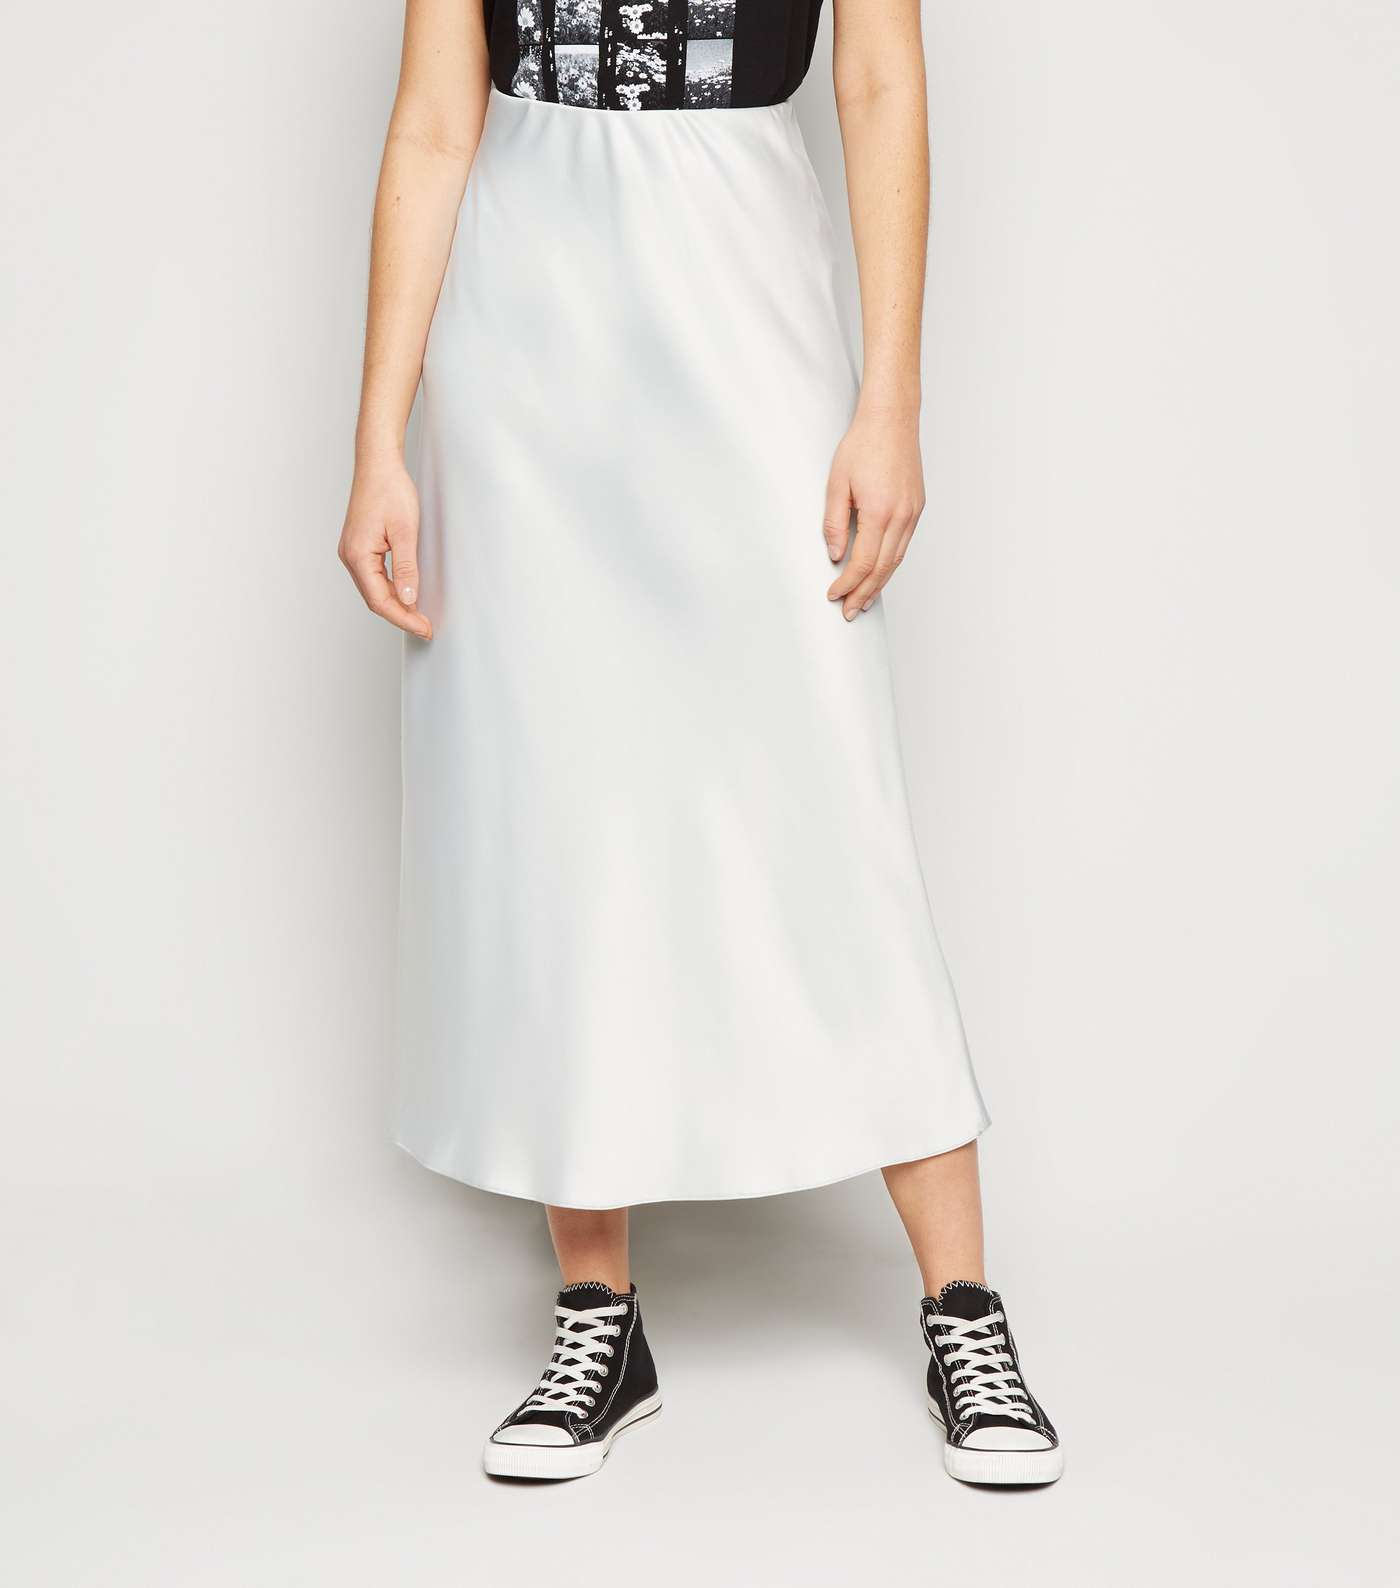 Silver Bias Cut Satin Midi Skirt Image 2